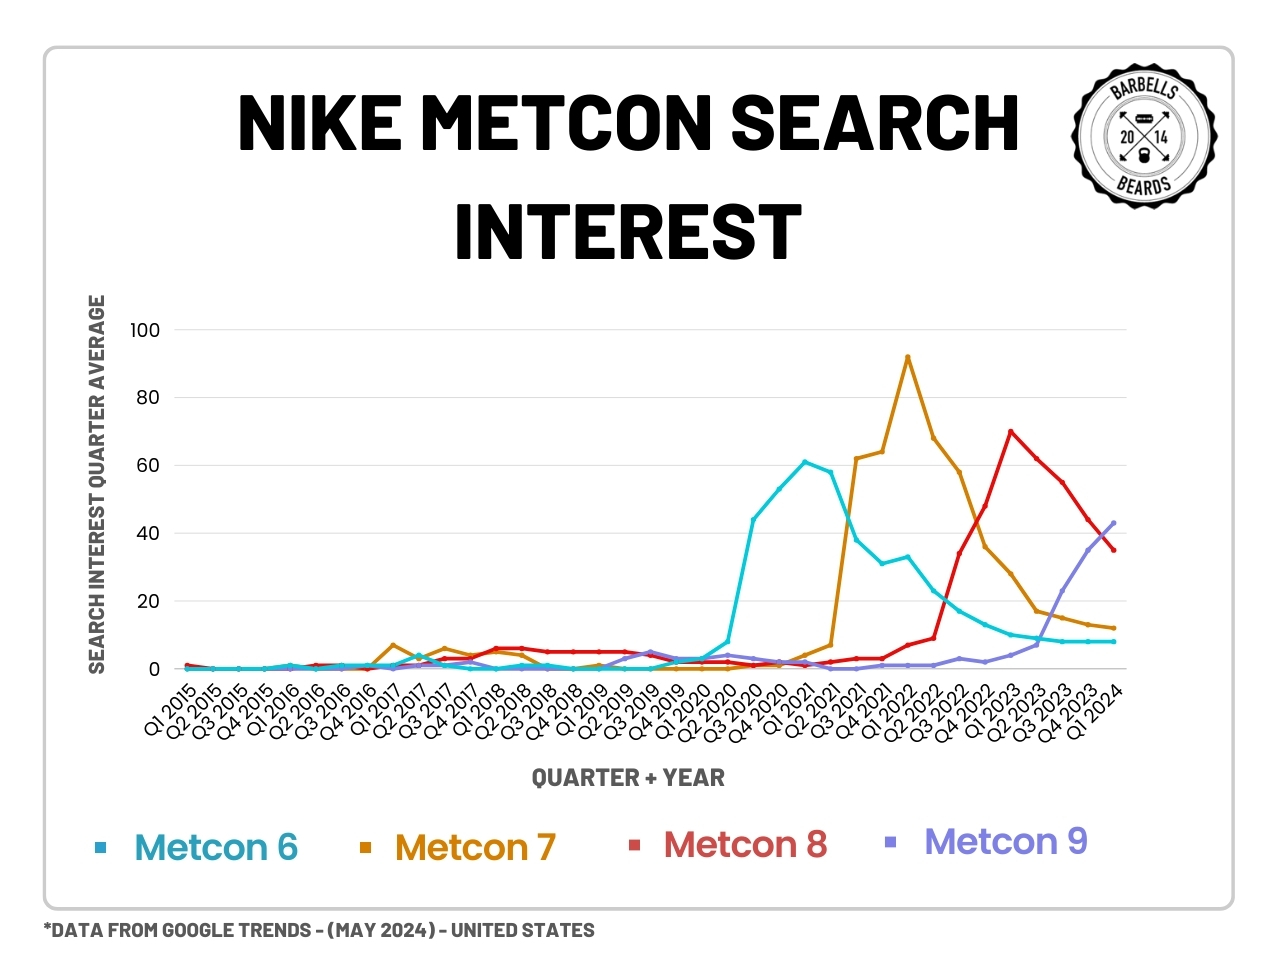 Nike Metcon Model Search Interest